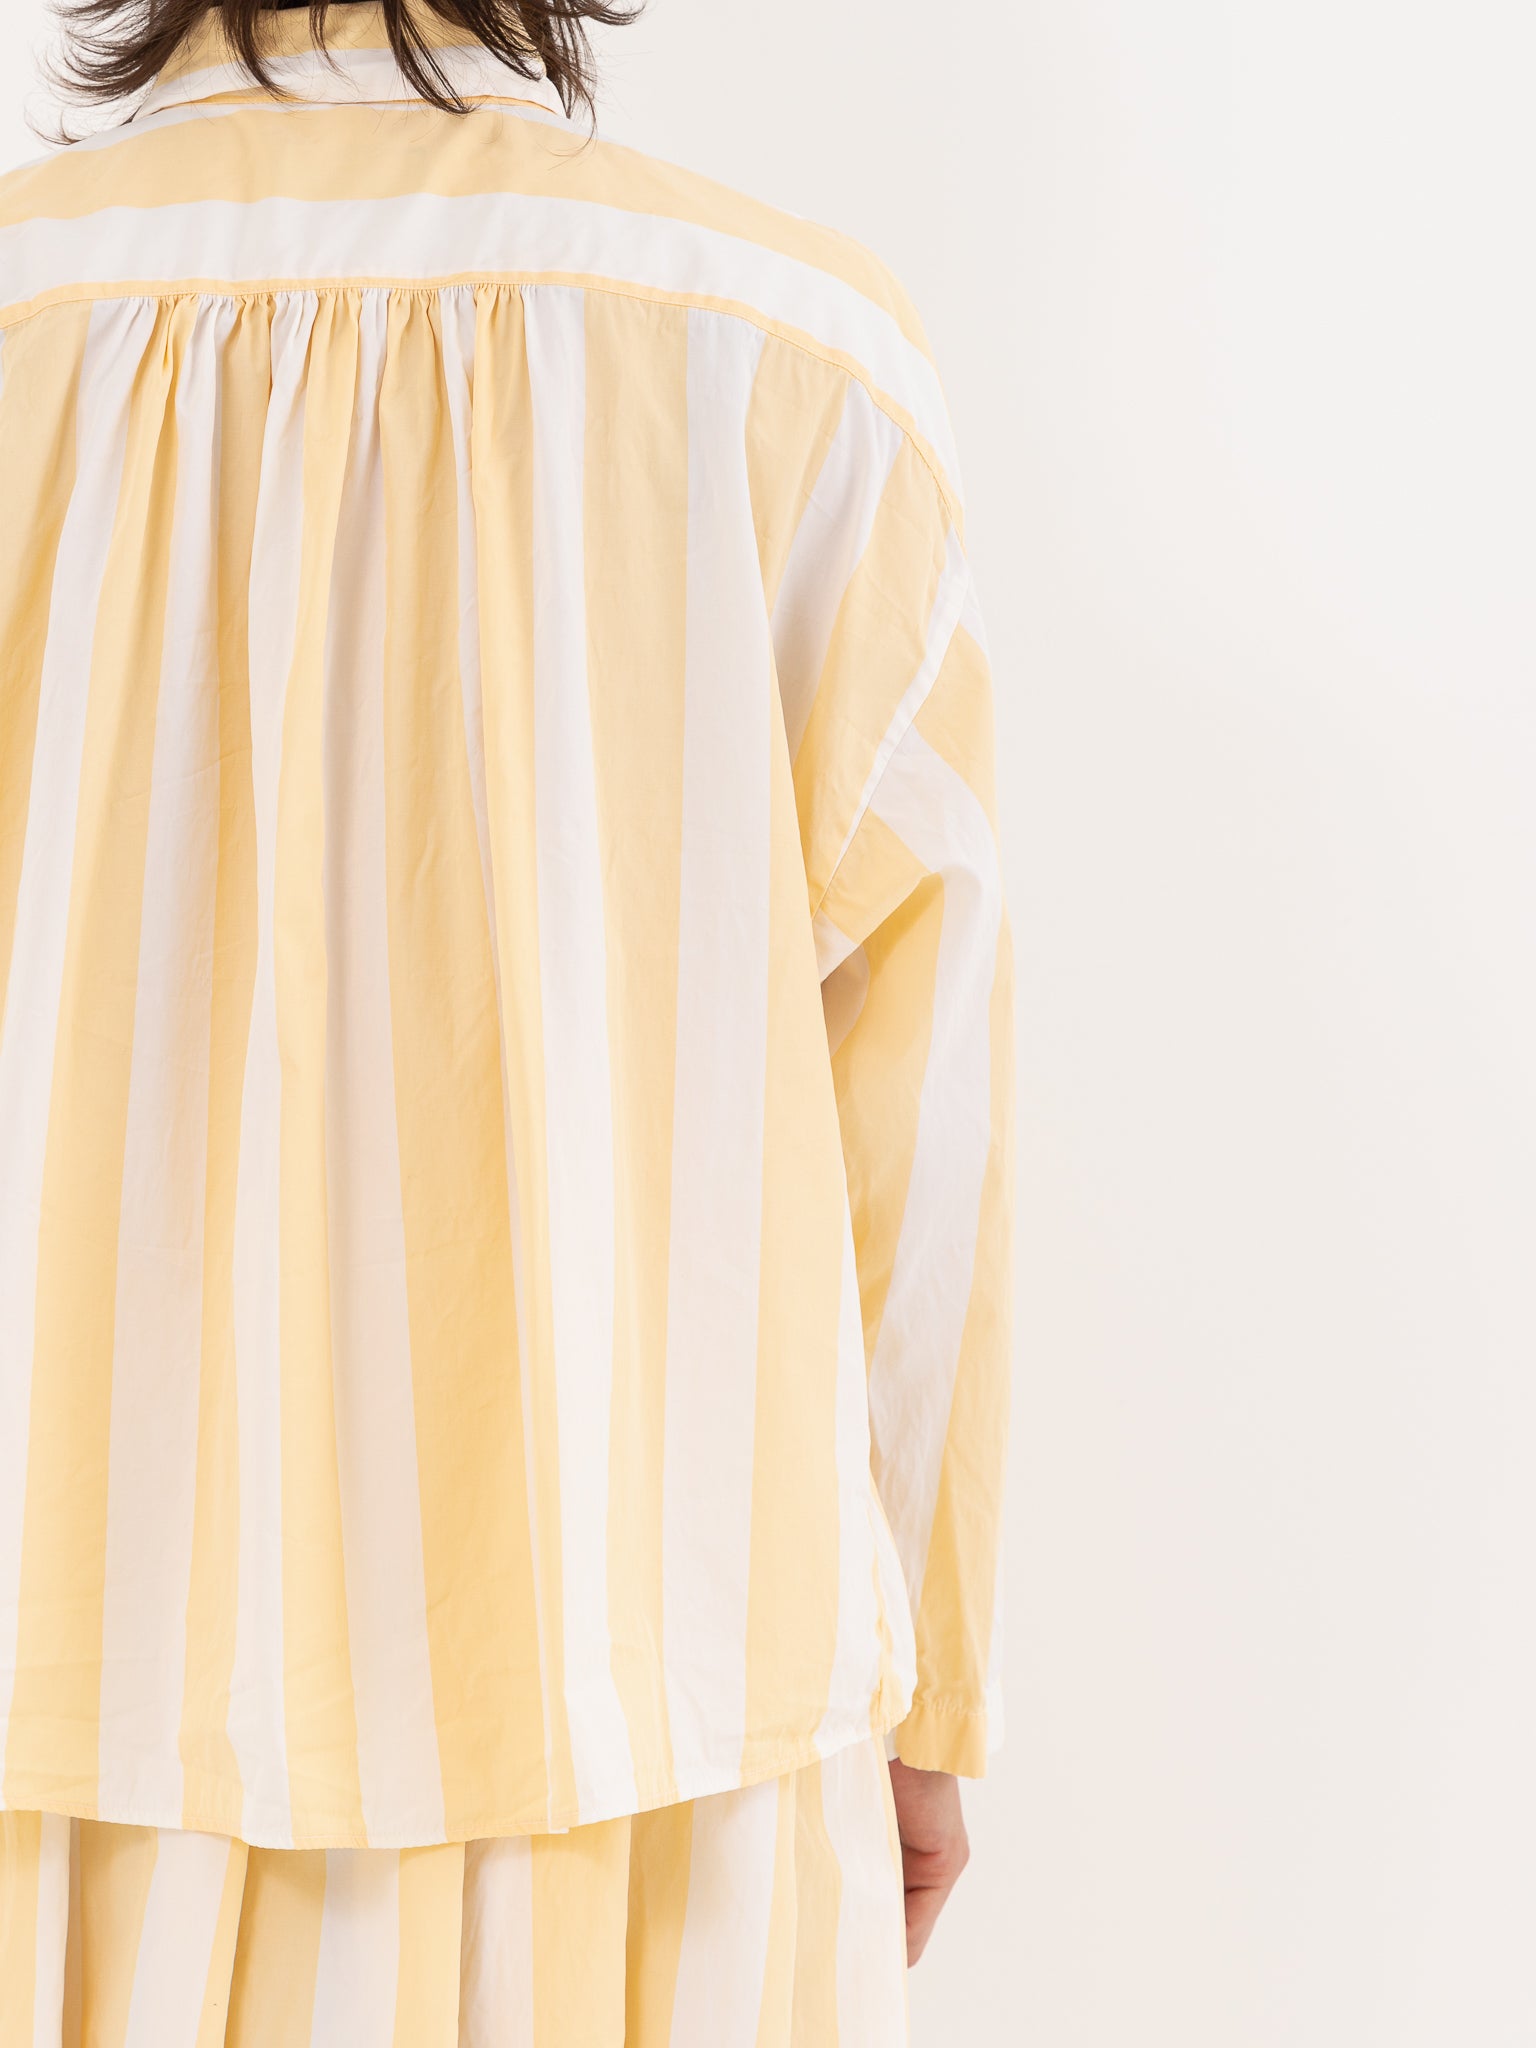 Bergfabel Short Overshirt, Yellow Stripe - Worthwhile, Inc.